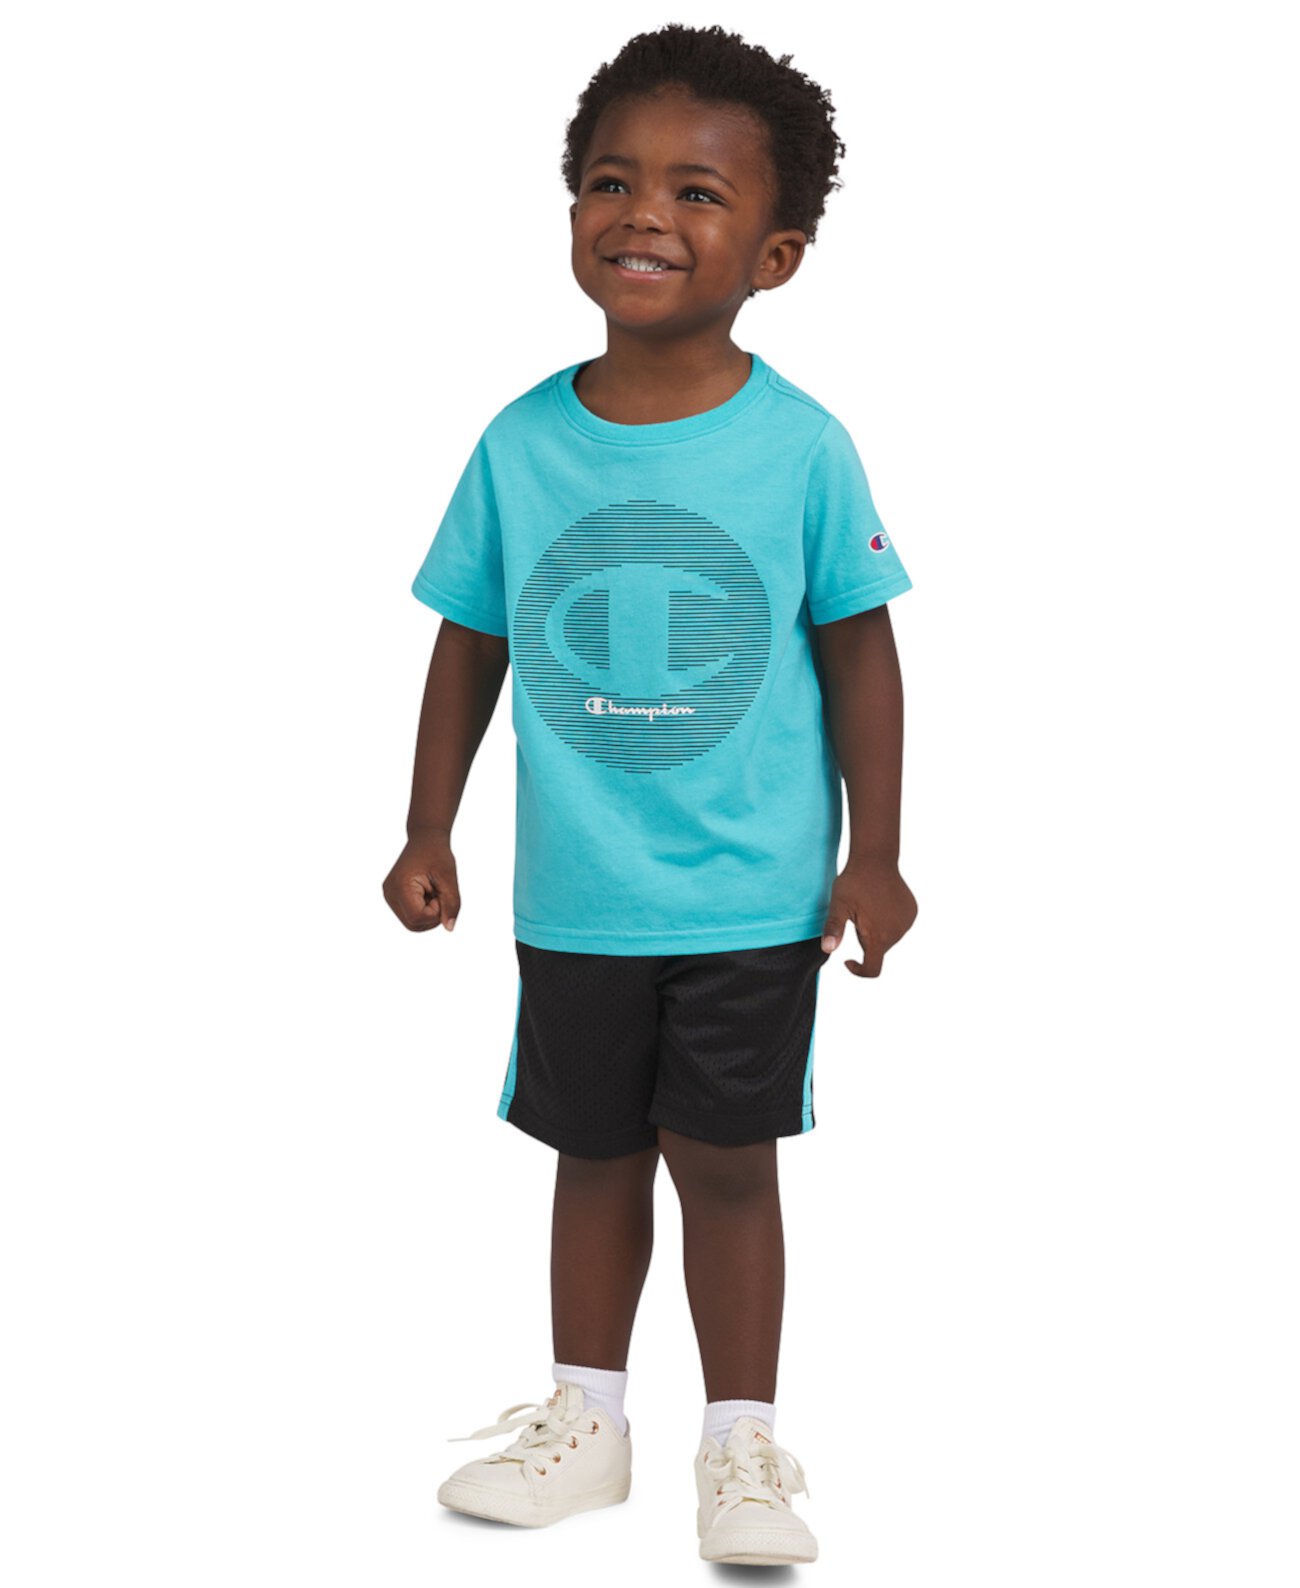 Toddler Boys Logo Graphic T-Shirt & Shorts, 2 Piece Set Champion